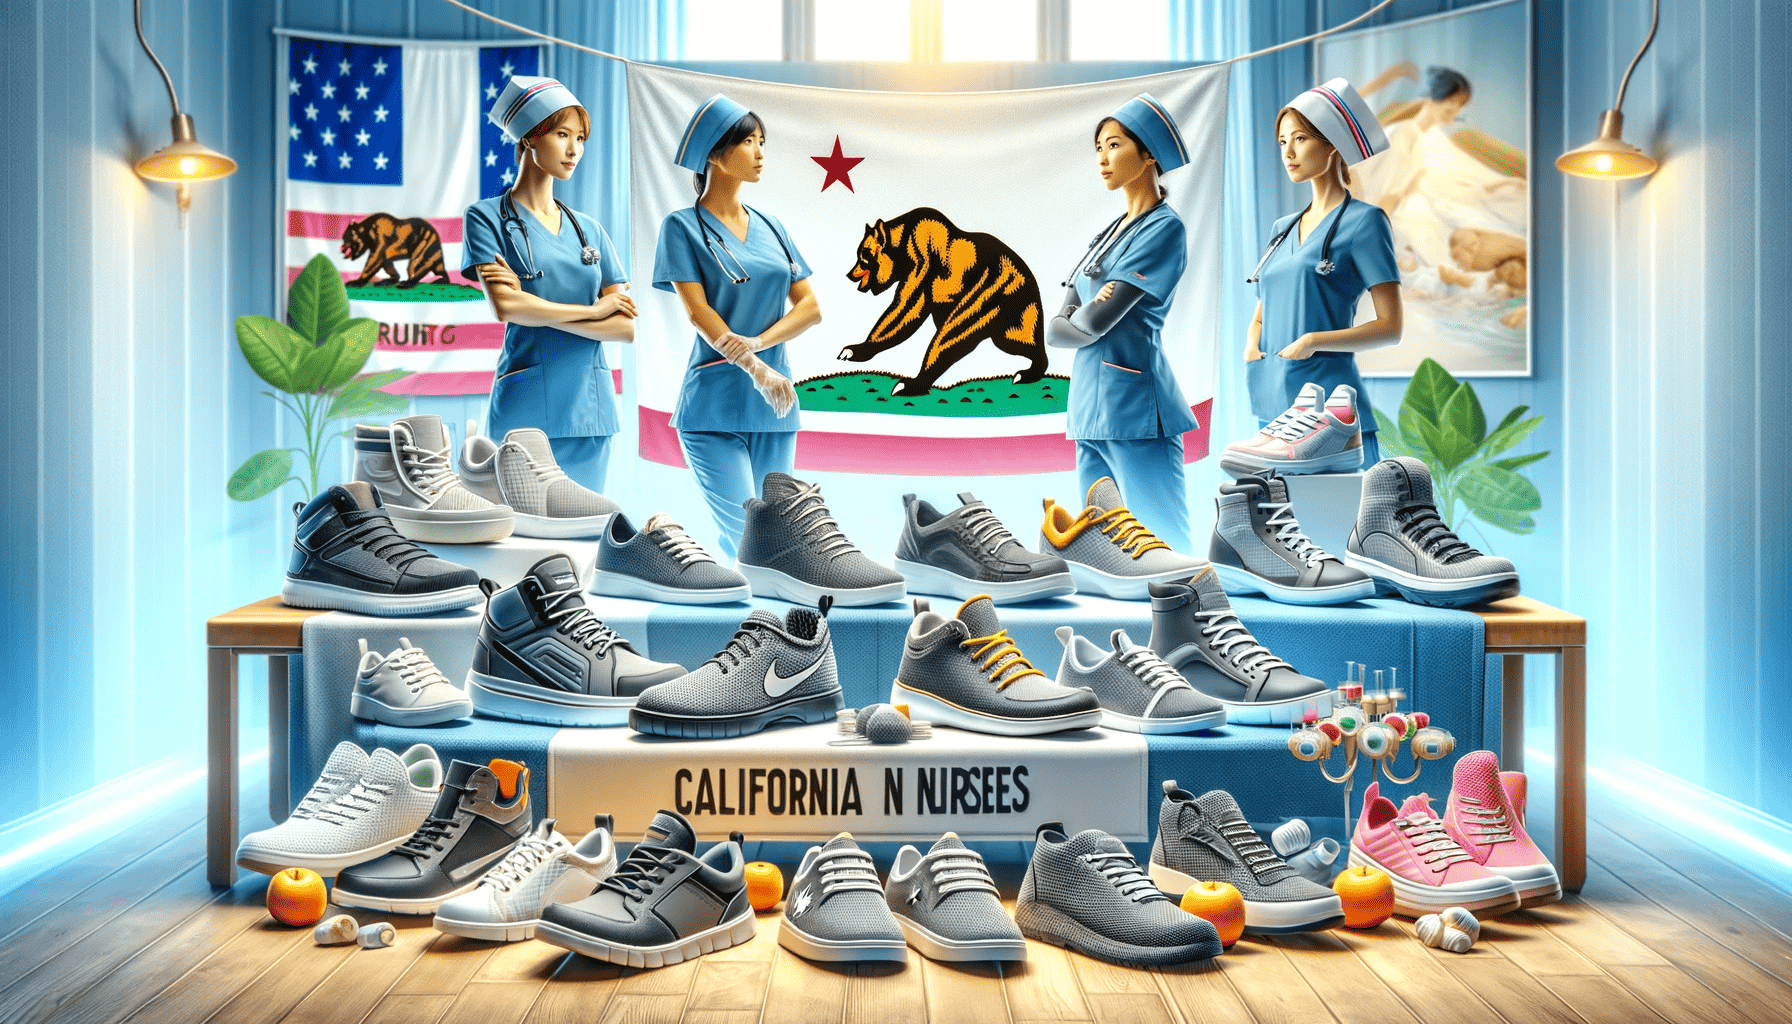 Nursing Shoes for California Nurses